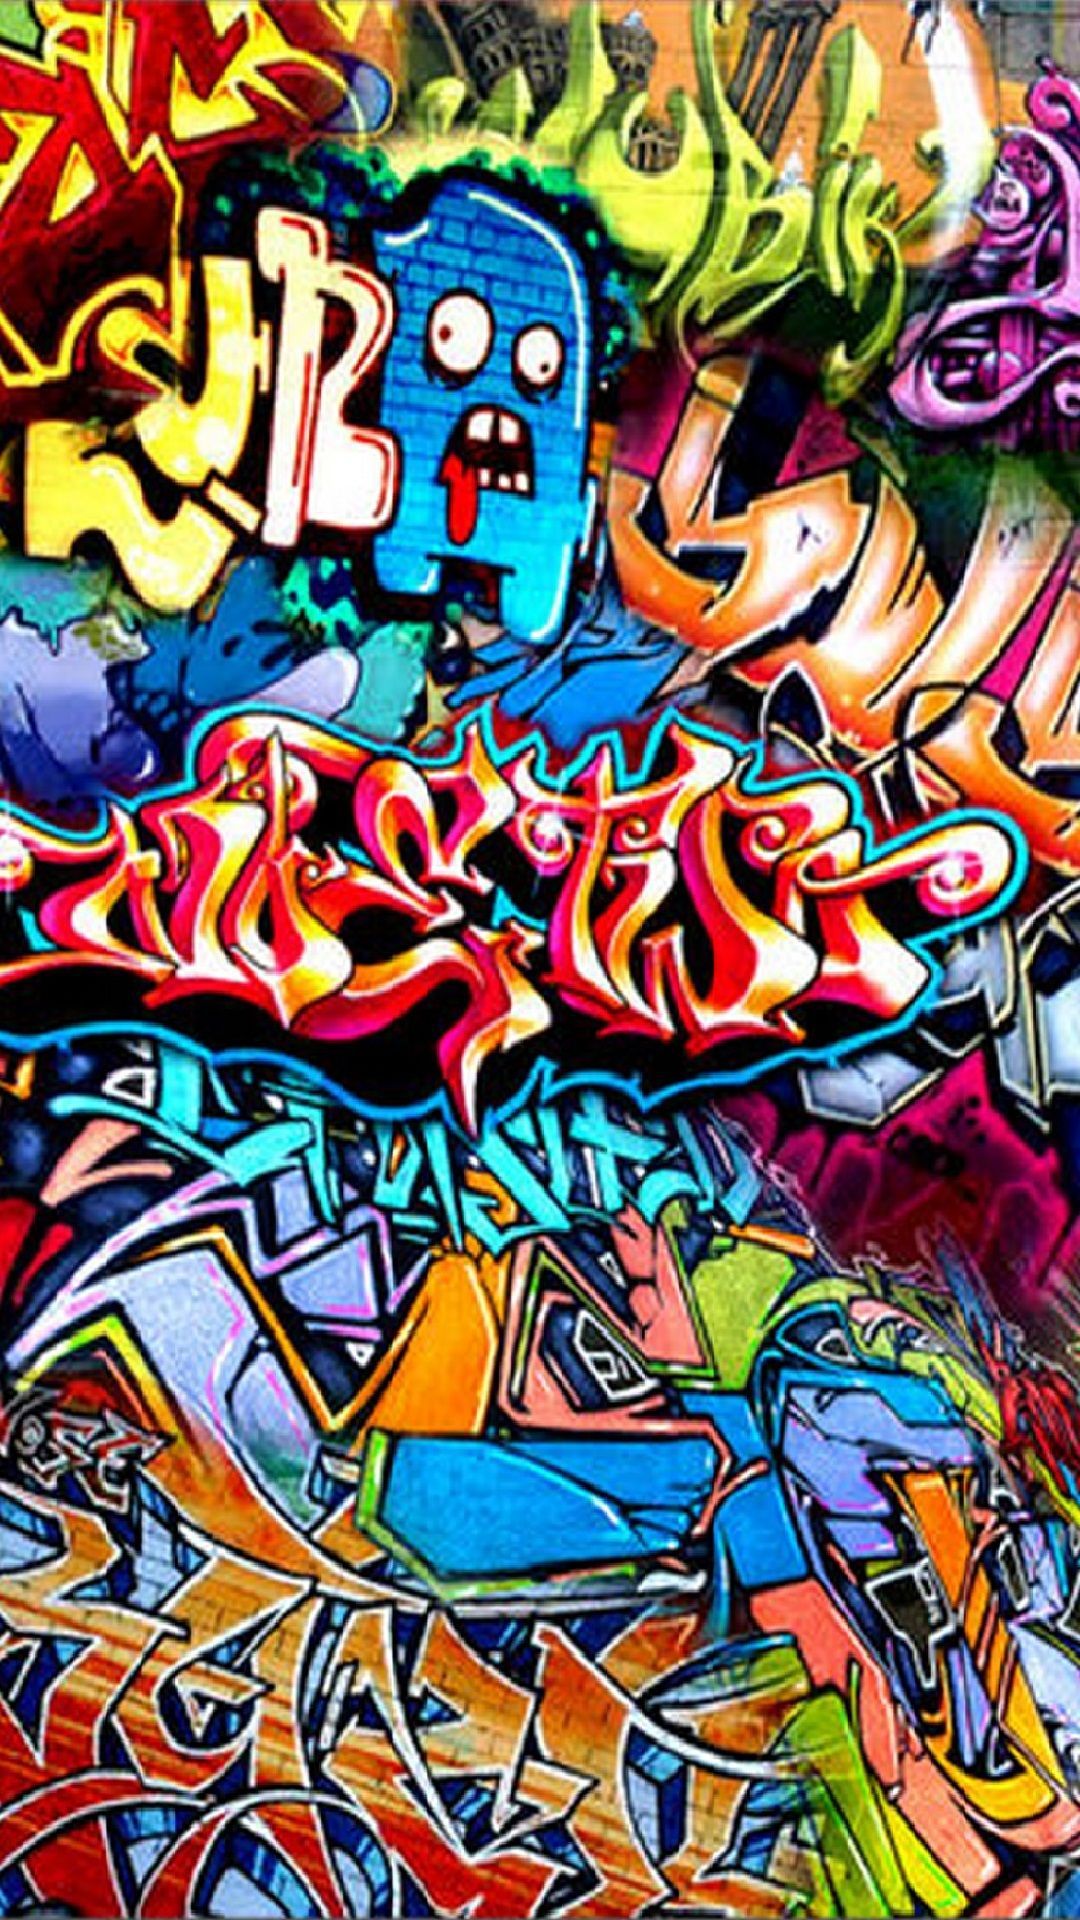 Graffiti wallpaper for your phone. - Graffiti